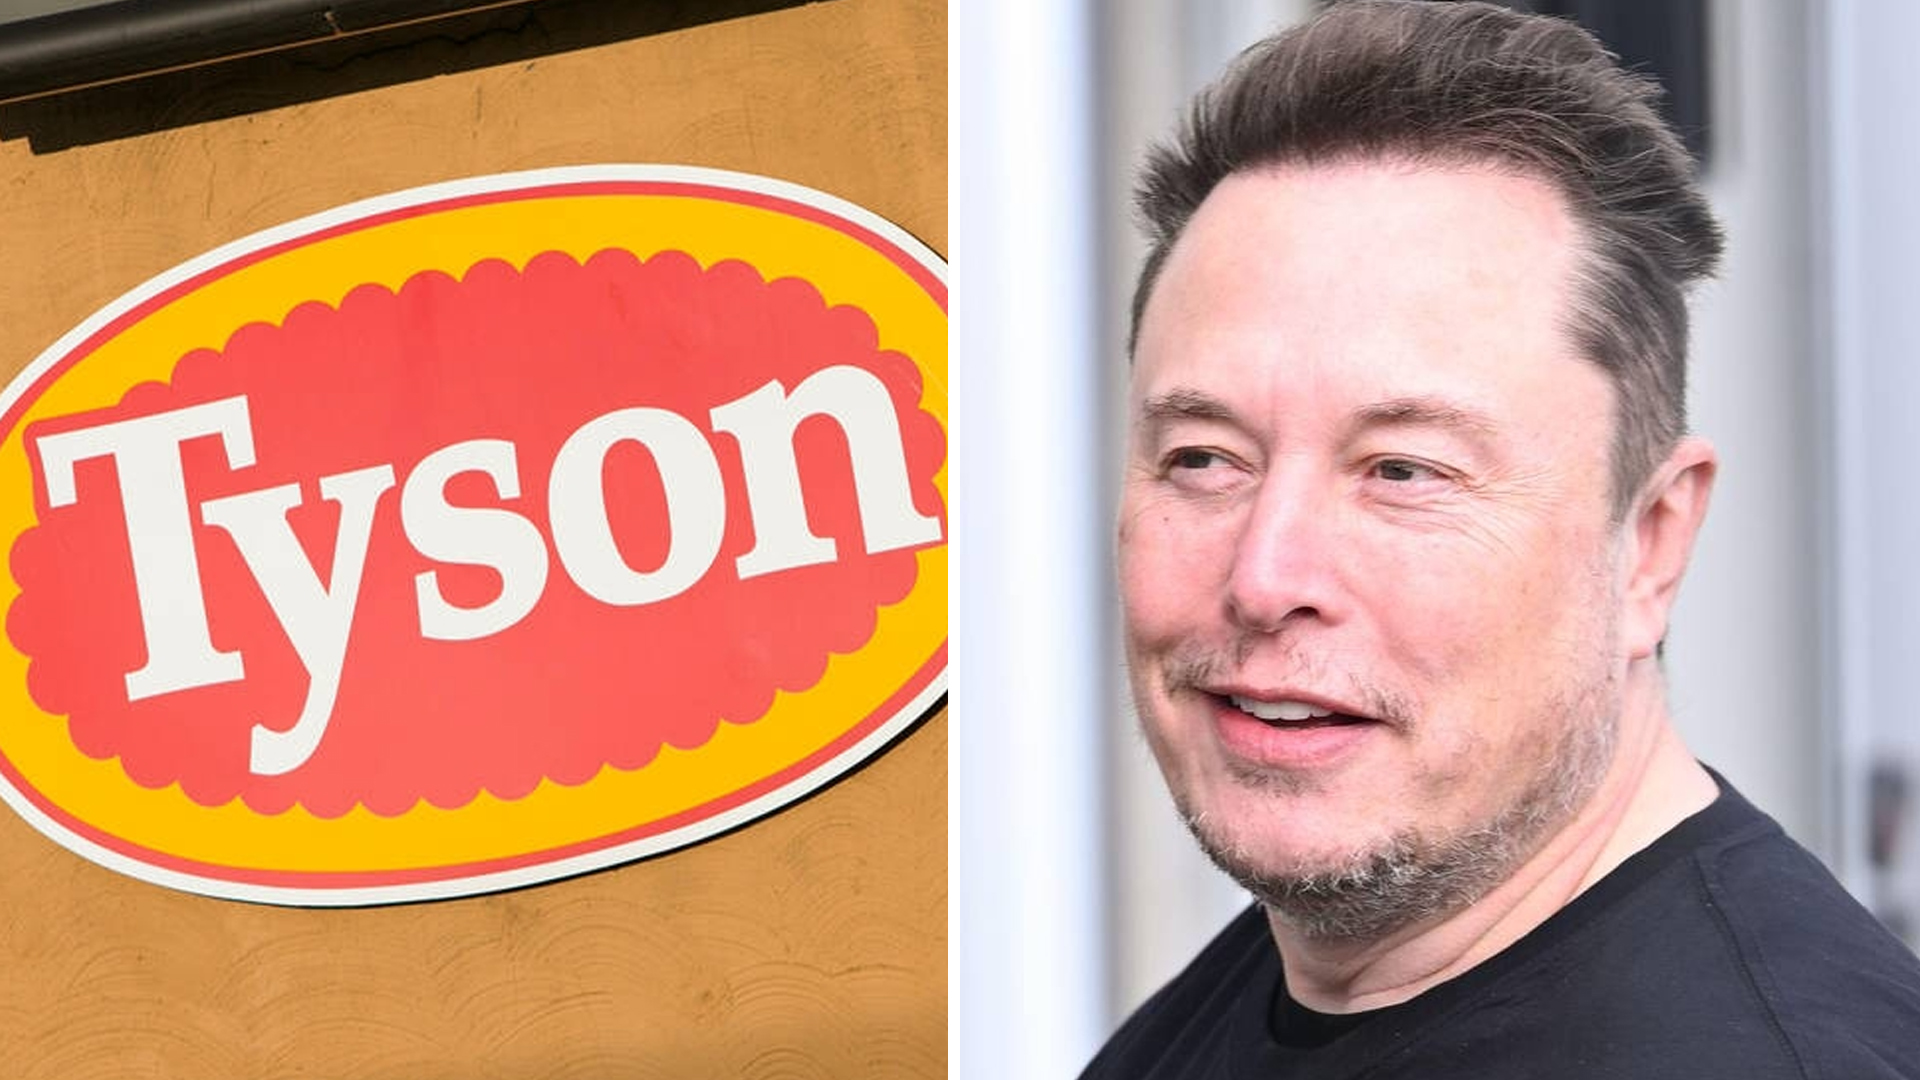 Elon Musk and Tyson Foods